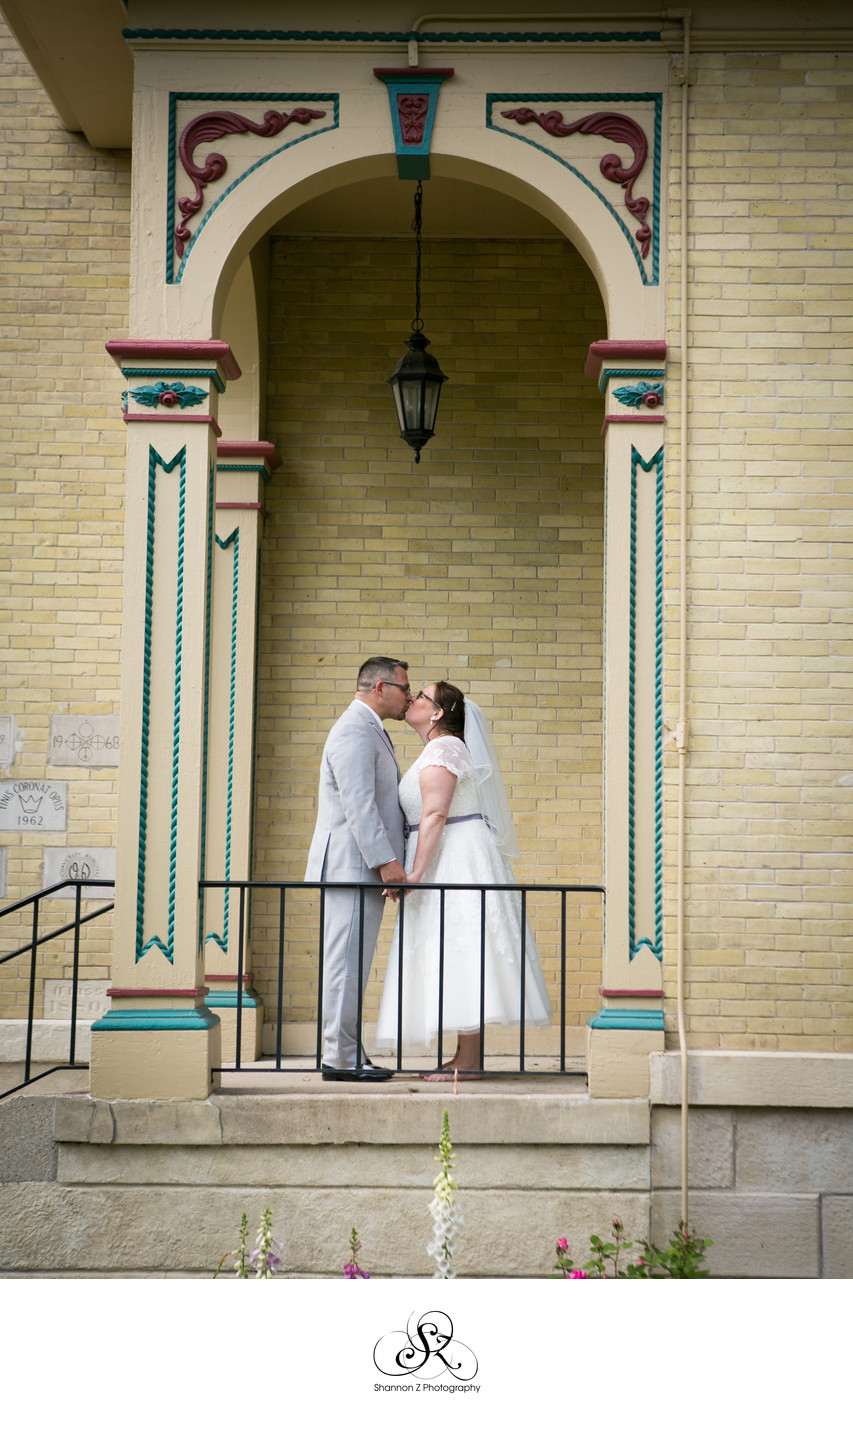 Kemper Center Weddings: Historic Buildings